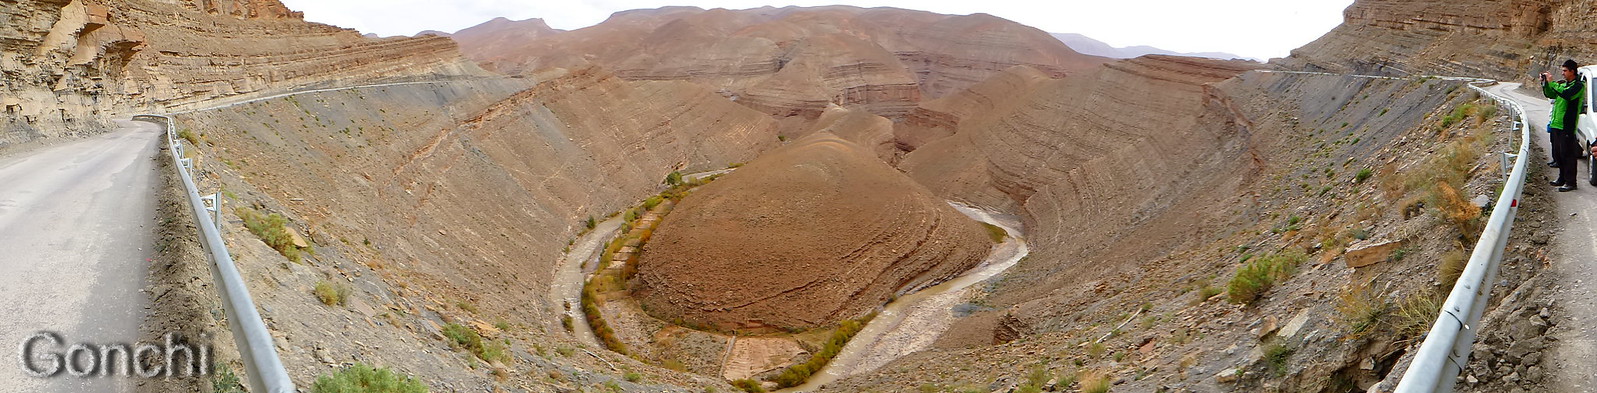 Tinghir - Garganta del Todgha - Valle del Dadés - Skoura - MARRUECOS SORPRENDE (5)